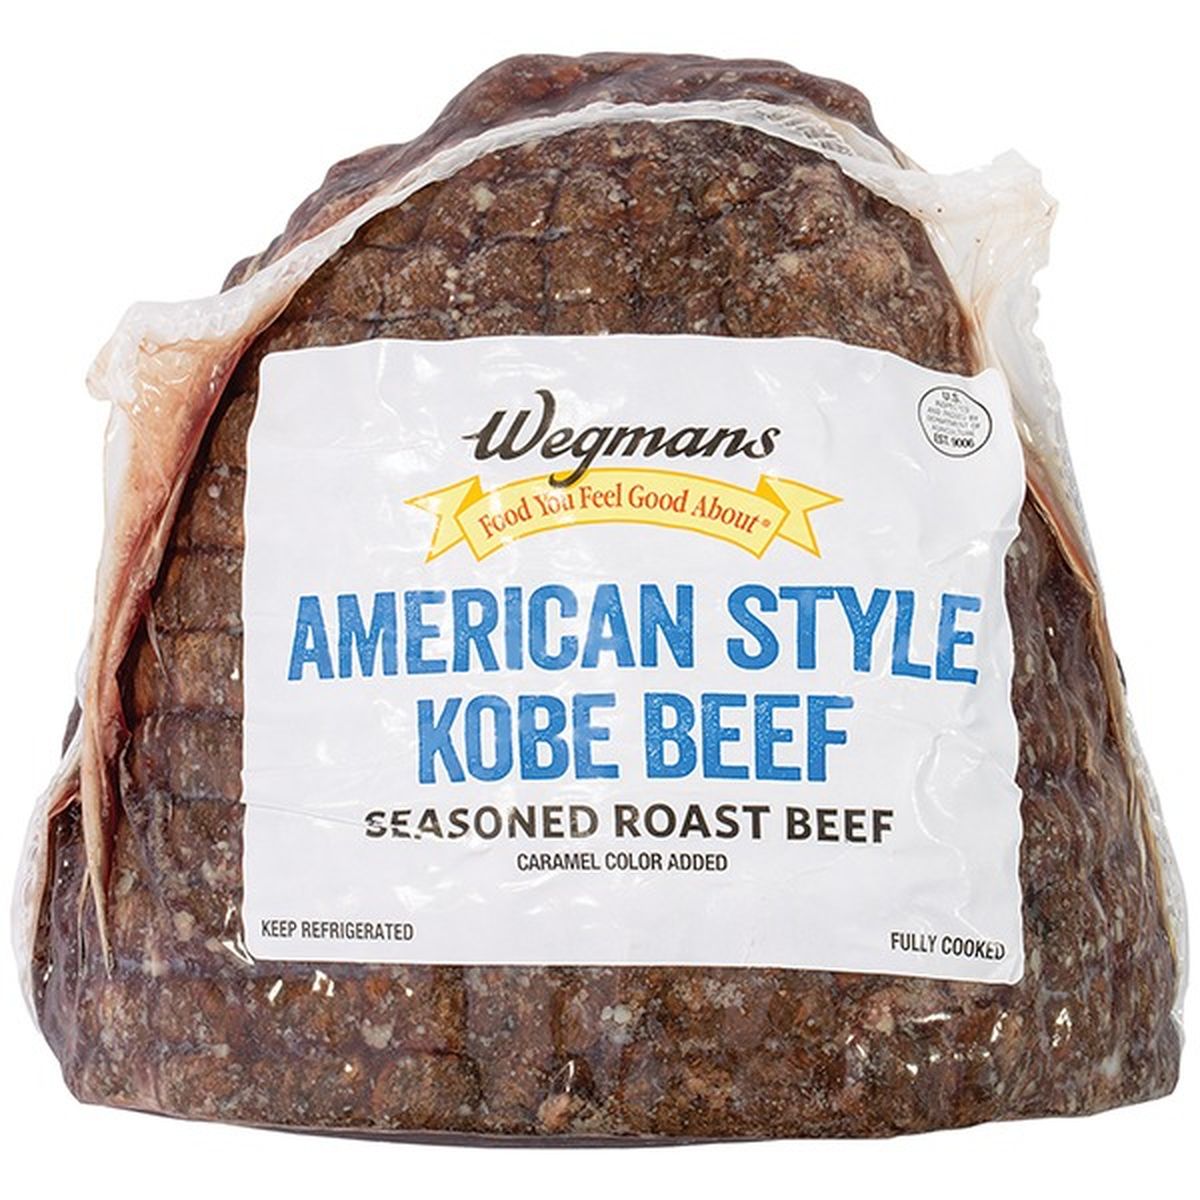 Calories in Wegmans American Style Kobe Roast Beef